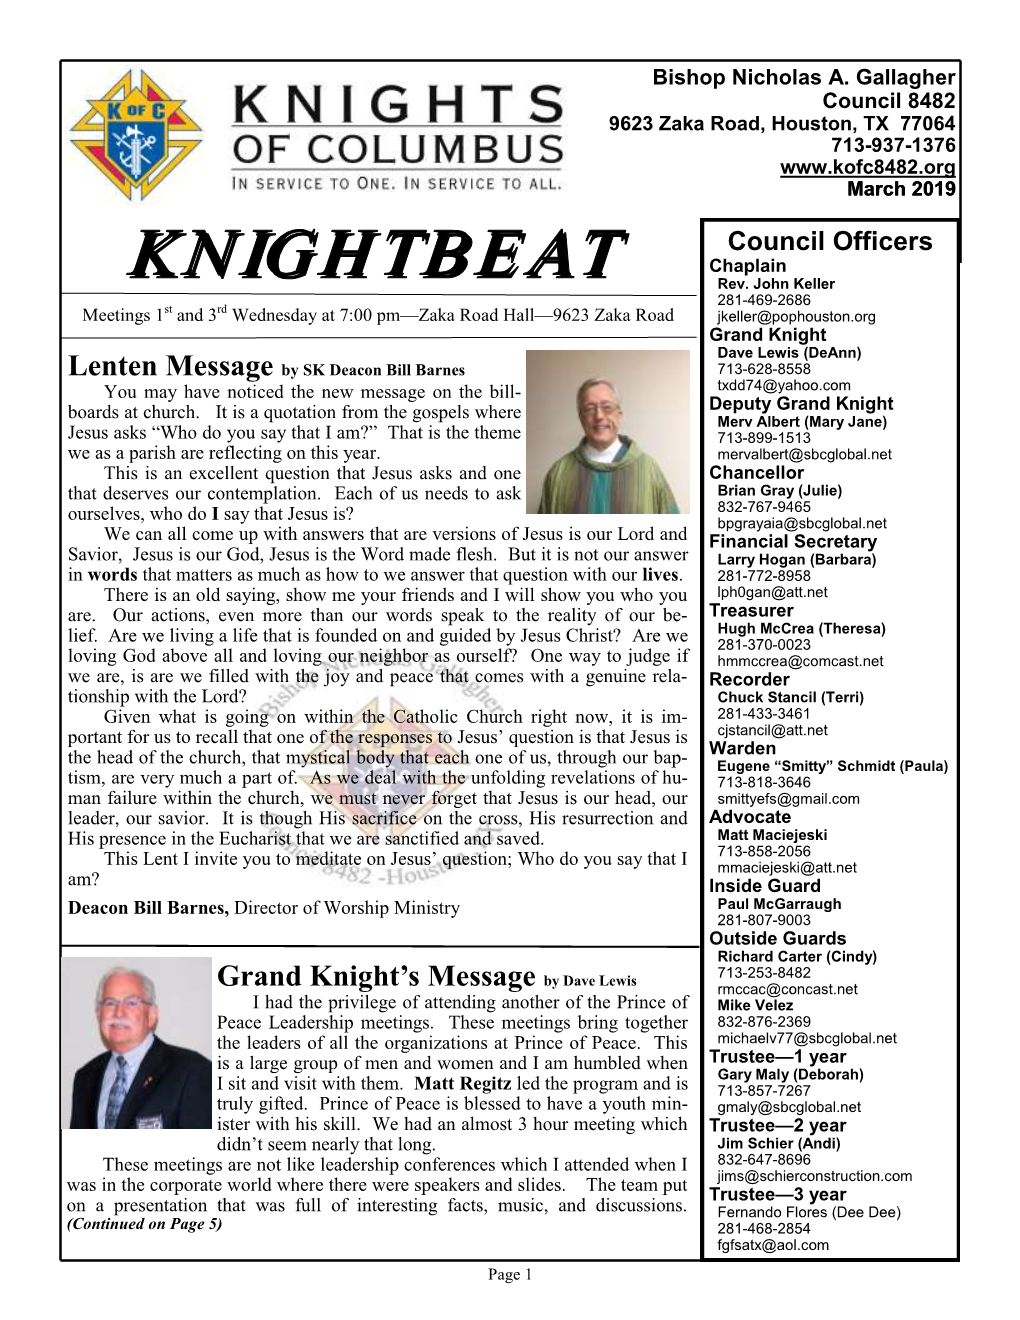 March 2019 KC 8482 Knightbeat Newsletter